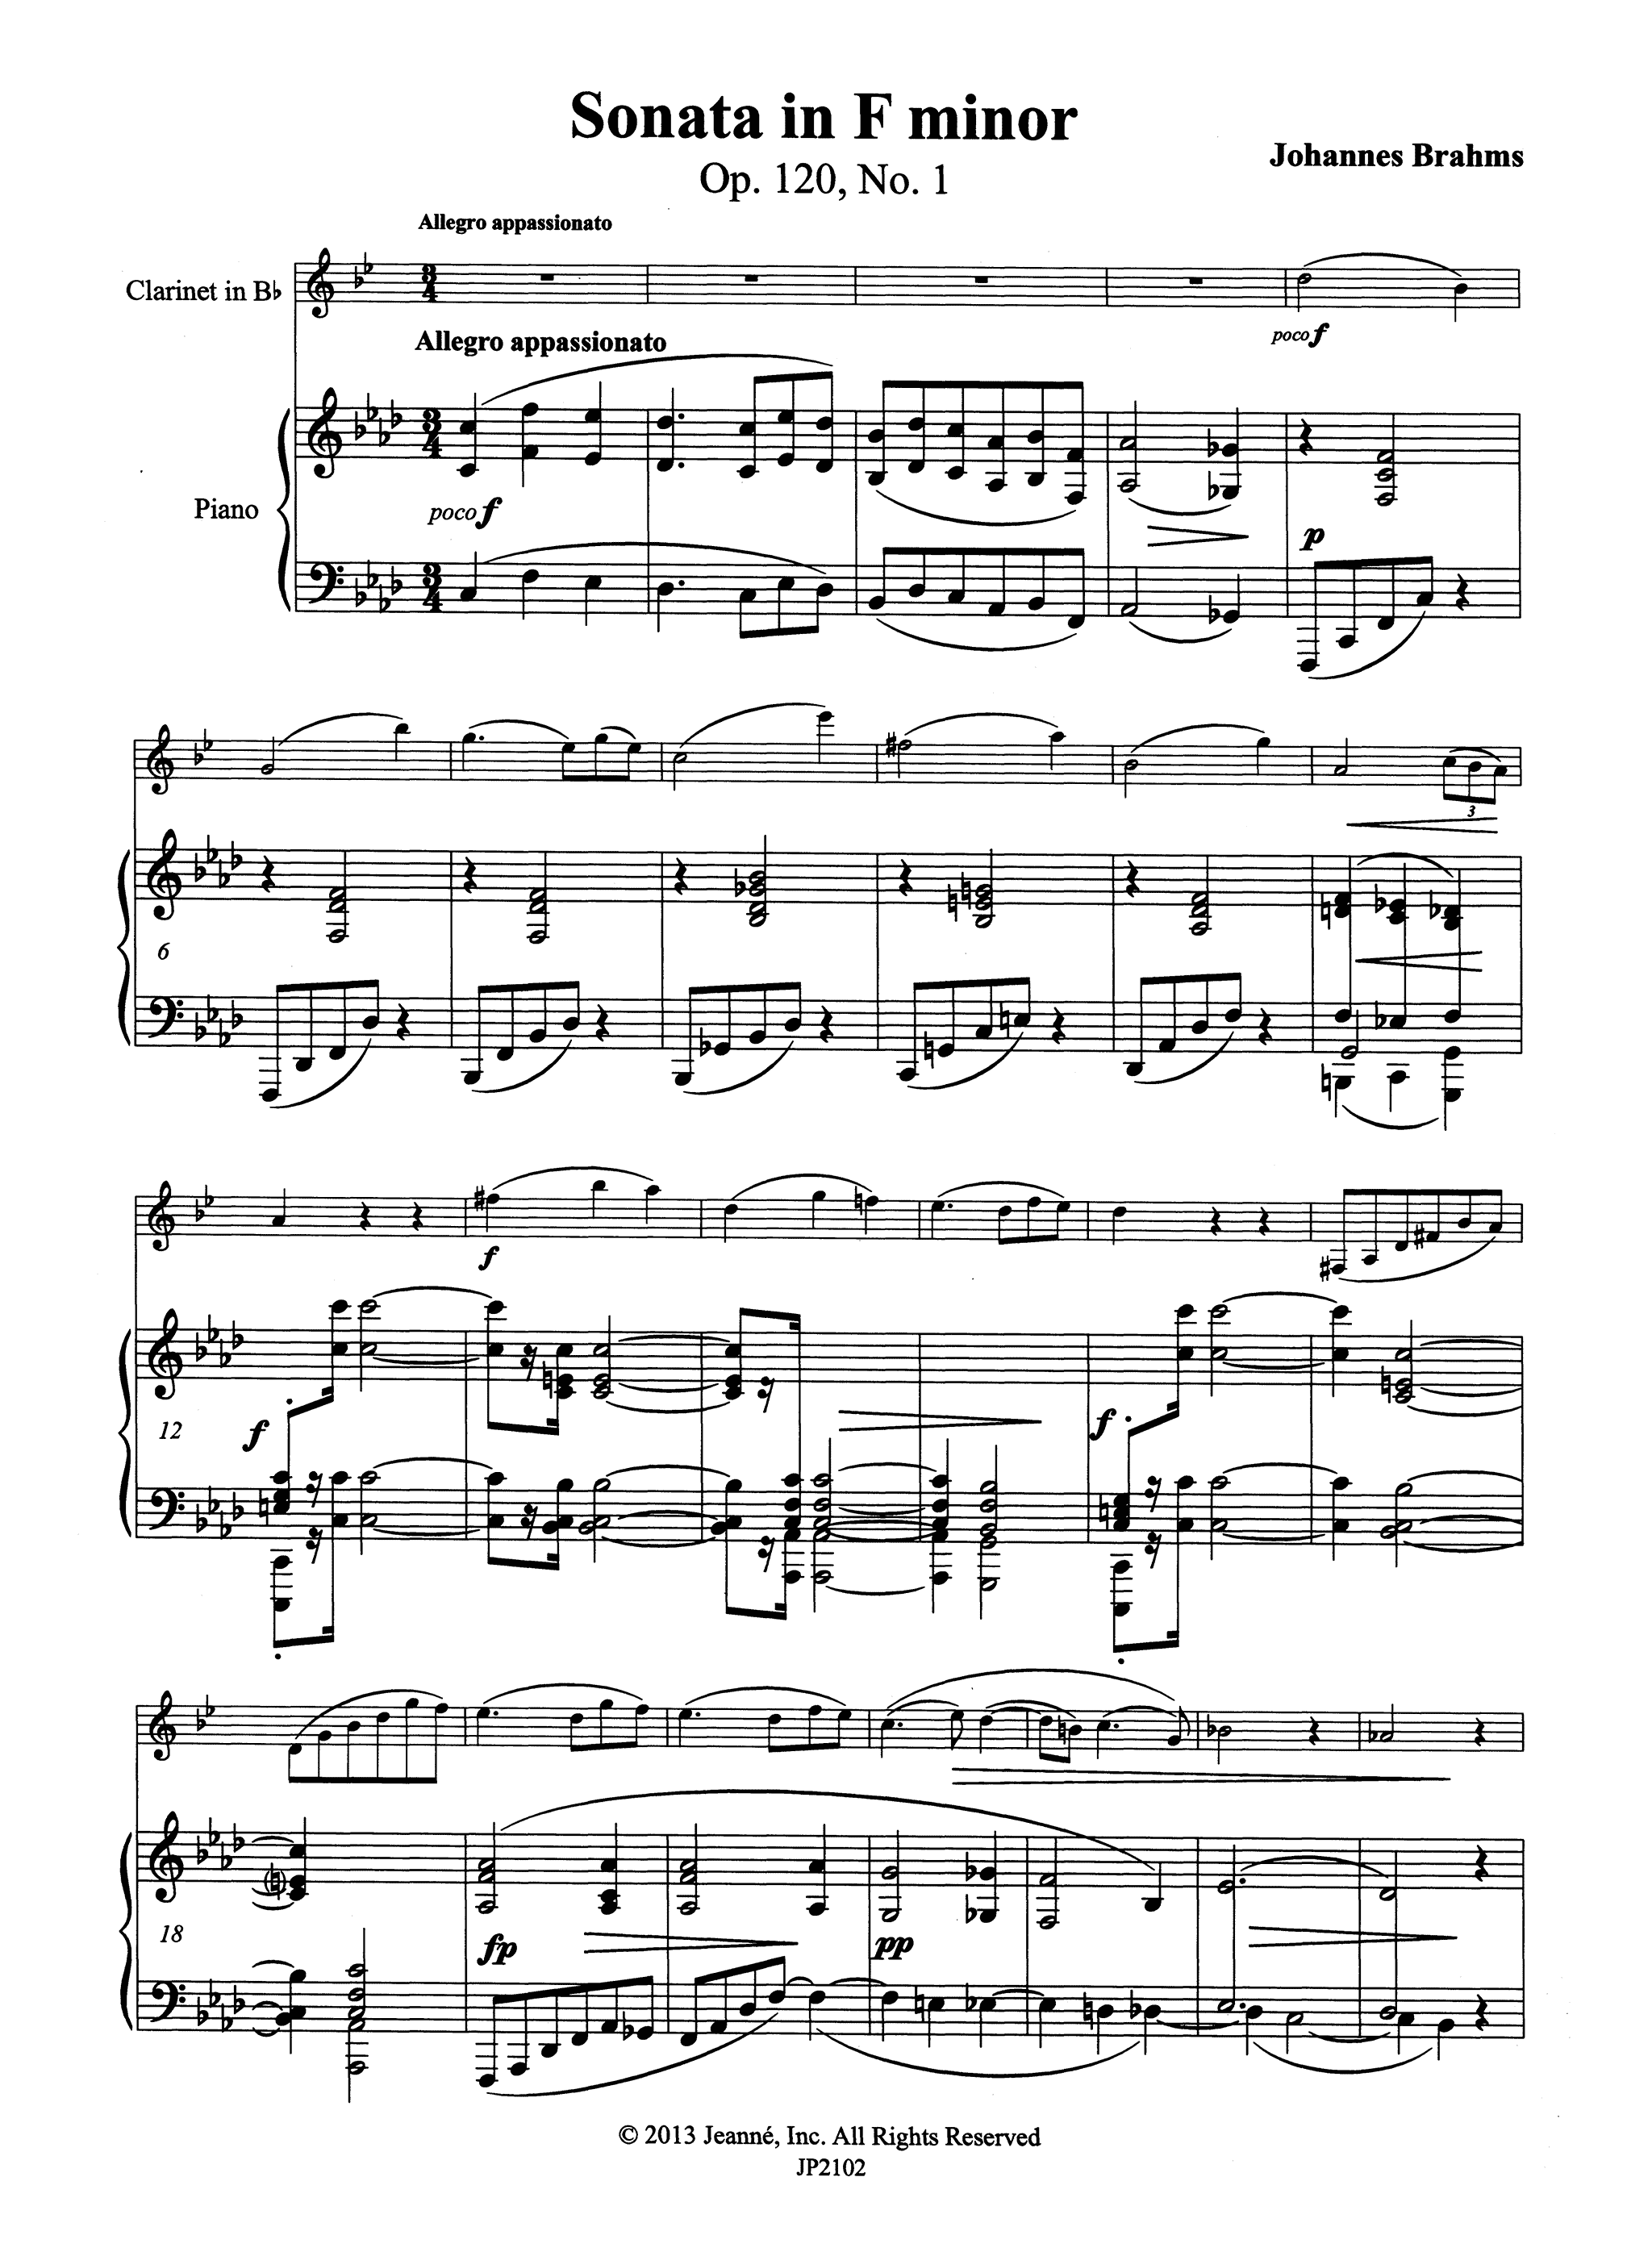 Brahms Sonata in F Minor, Op. 120 No. 1 - Movement 1